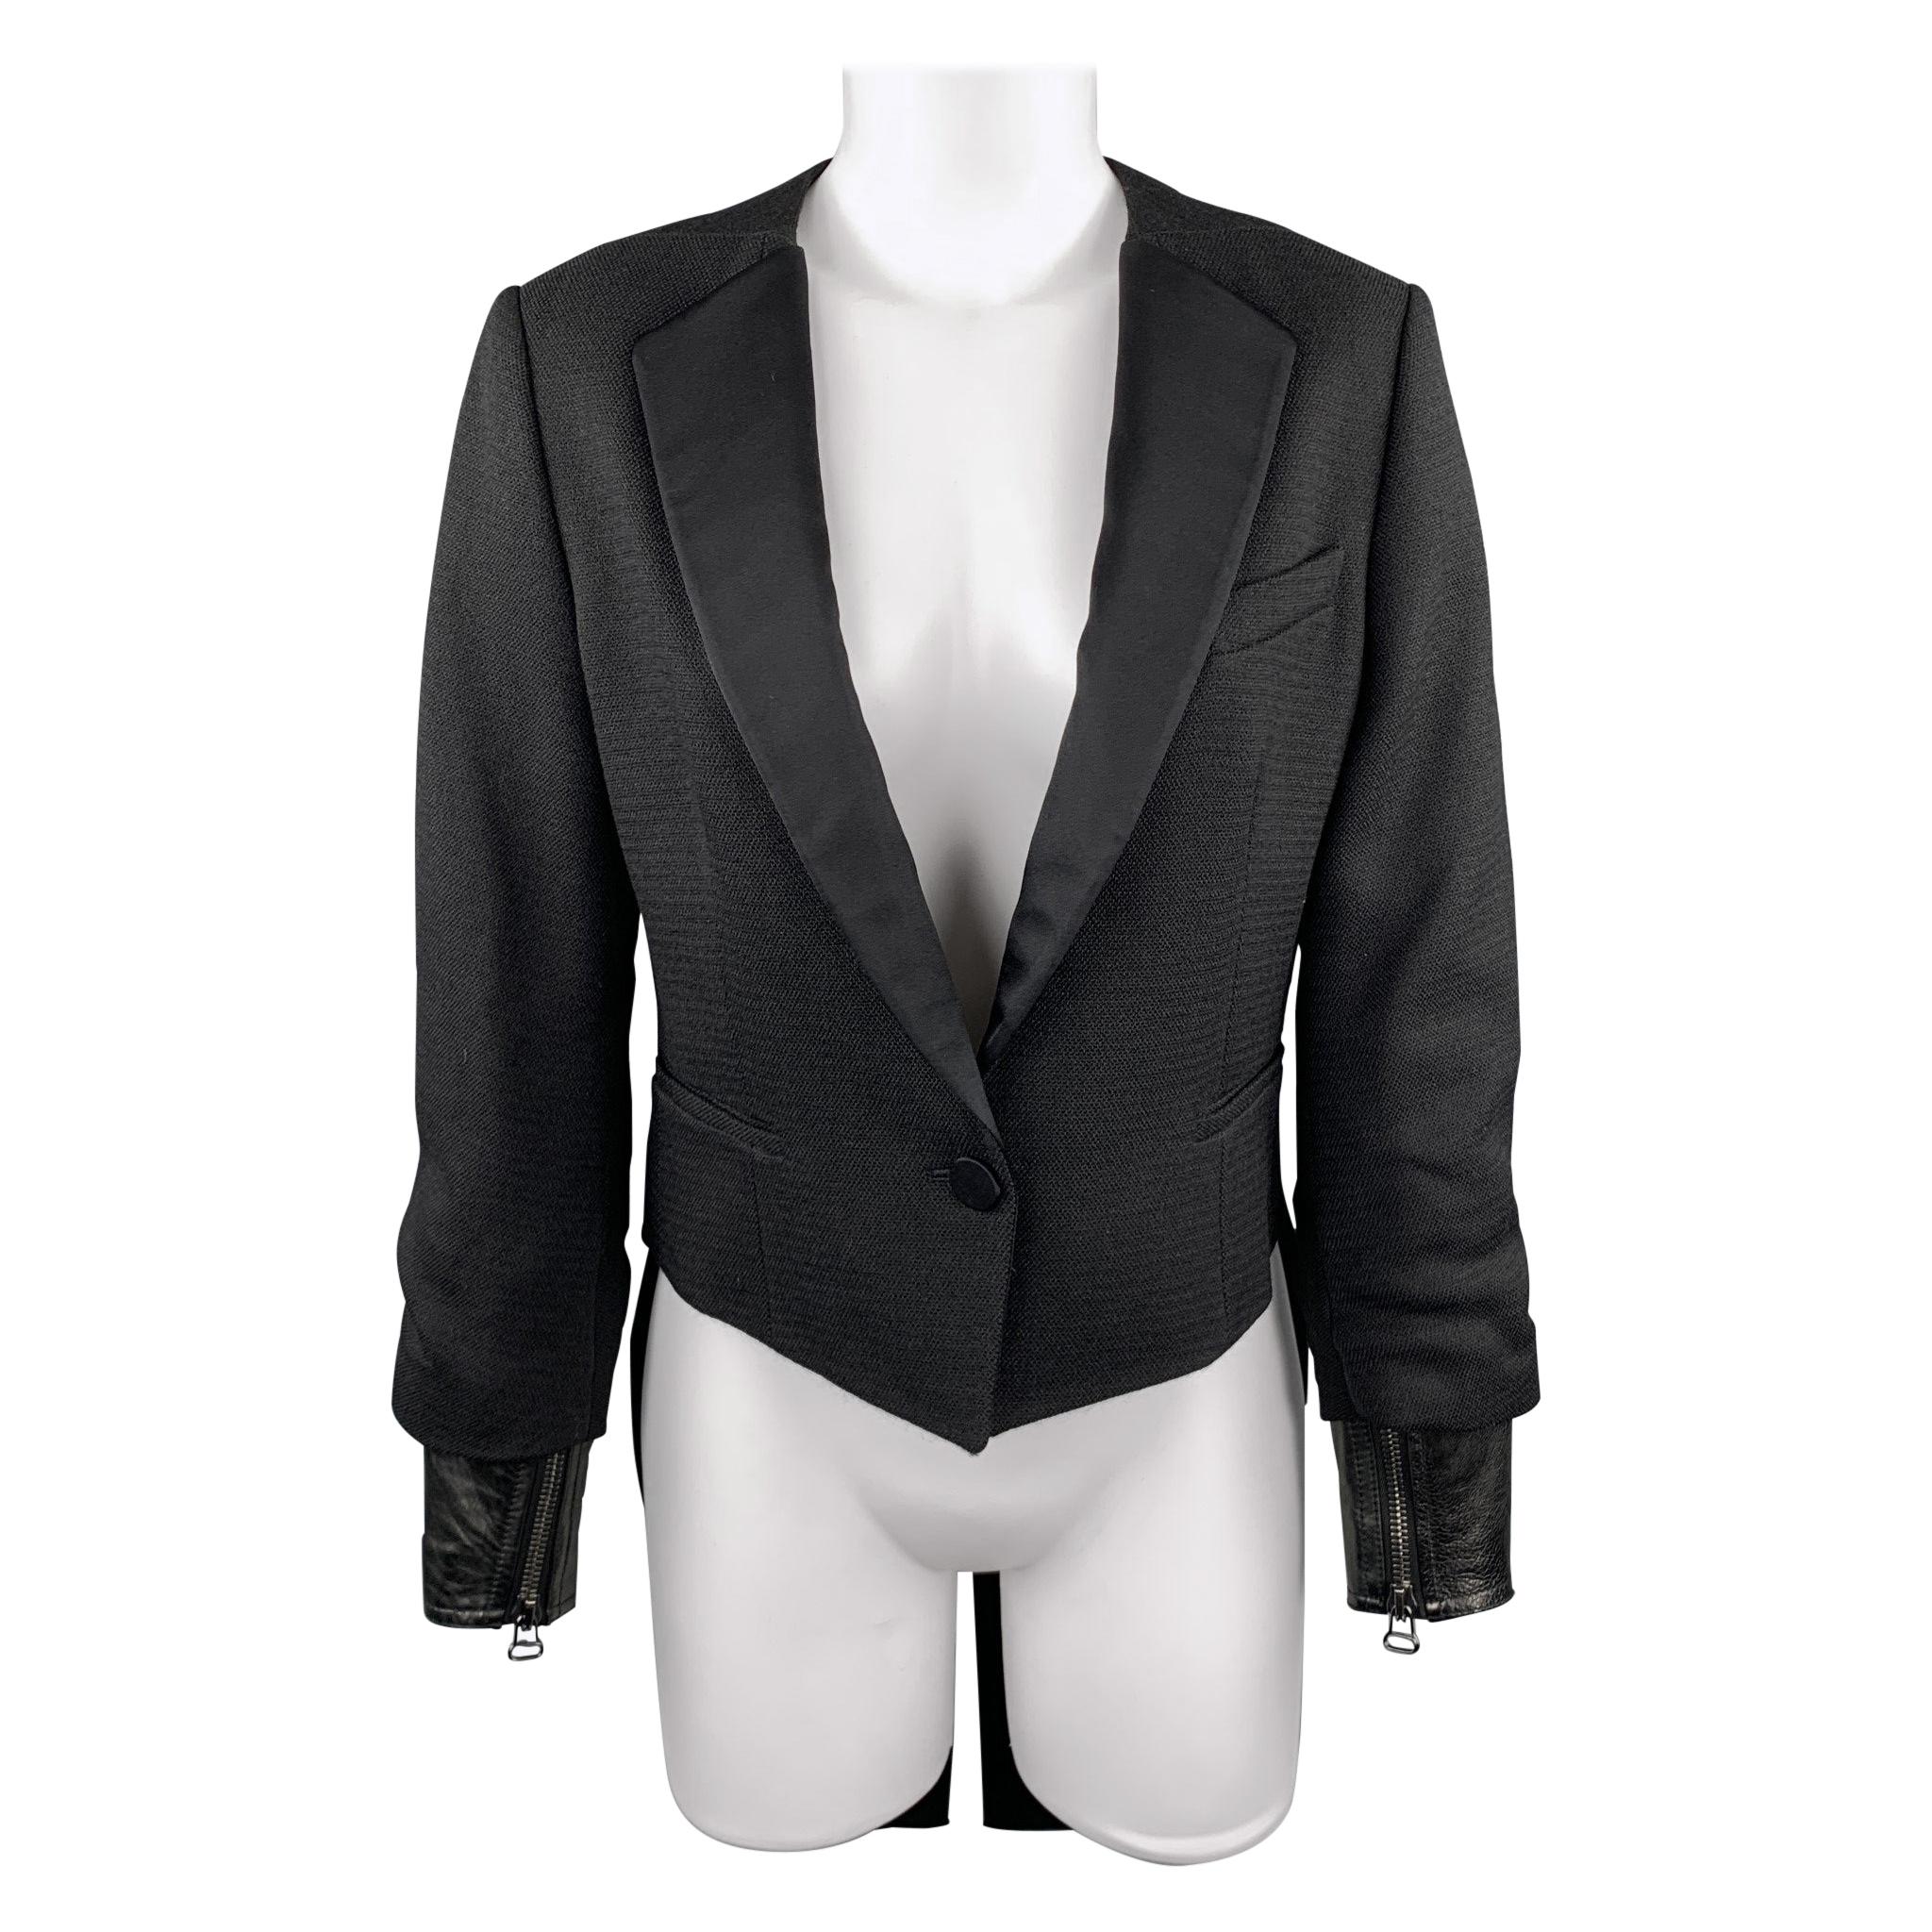 3.1 PHILLIP LIM Size 6 Black Woven Tuxedo Lapel Leather Cuff Tails Jacket